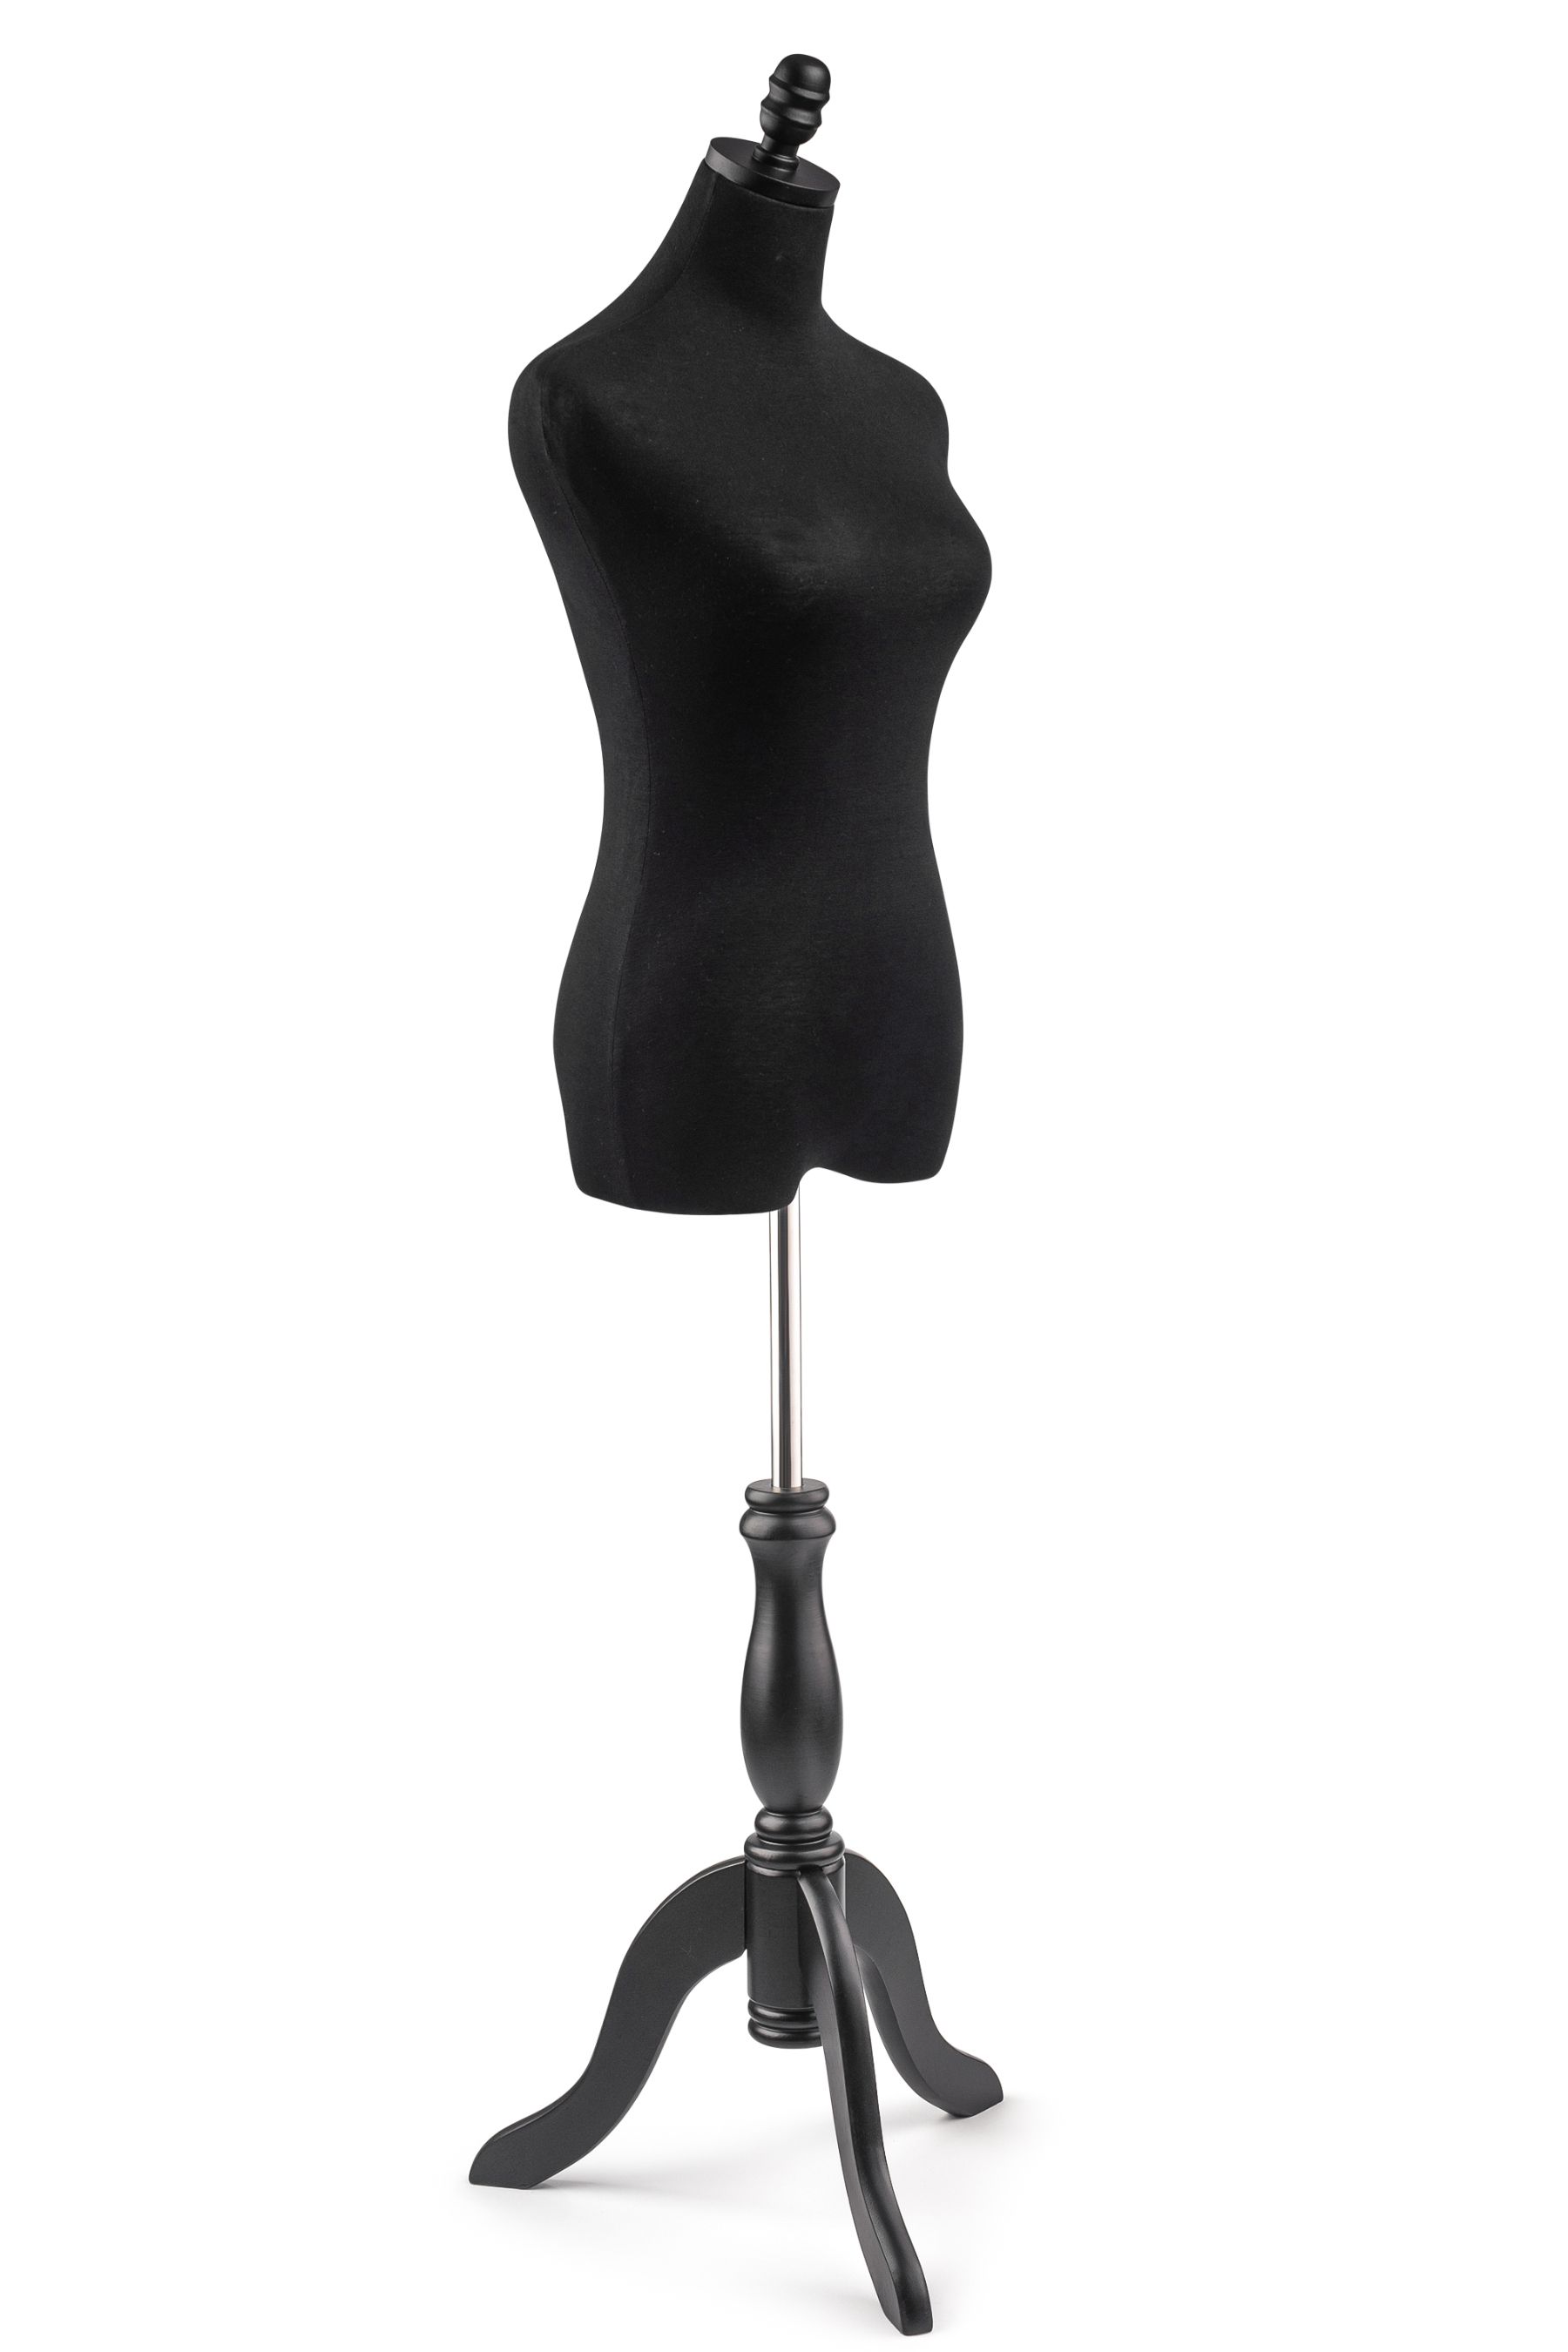 MH Black wooden tripod stand for Torsos black base Dress Forms 